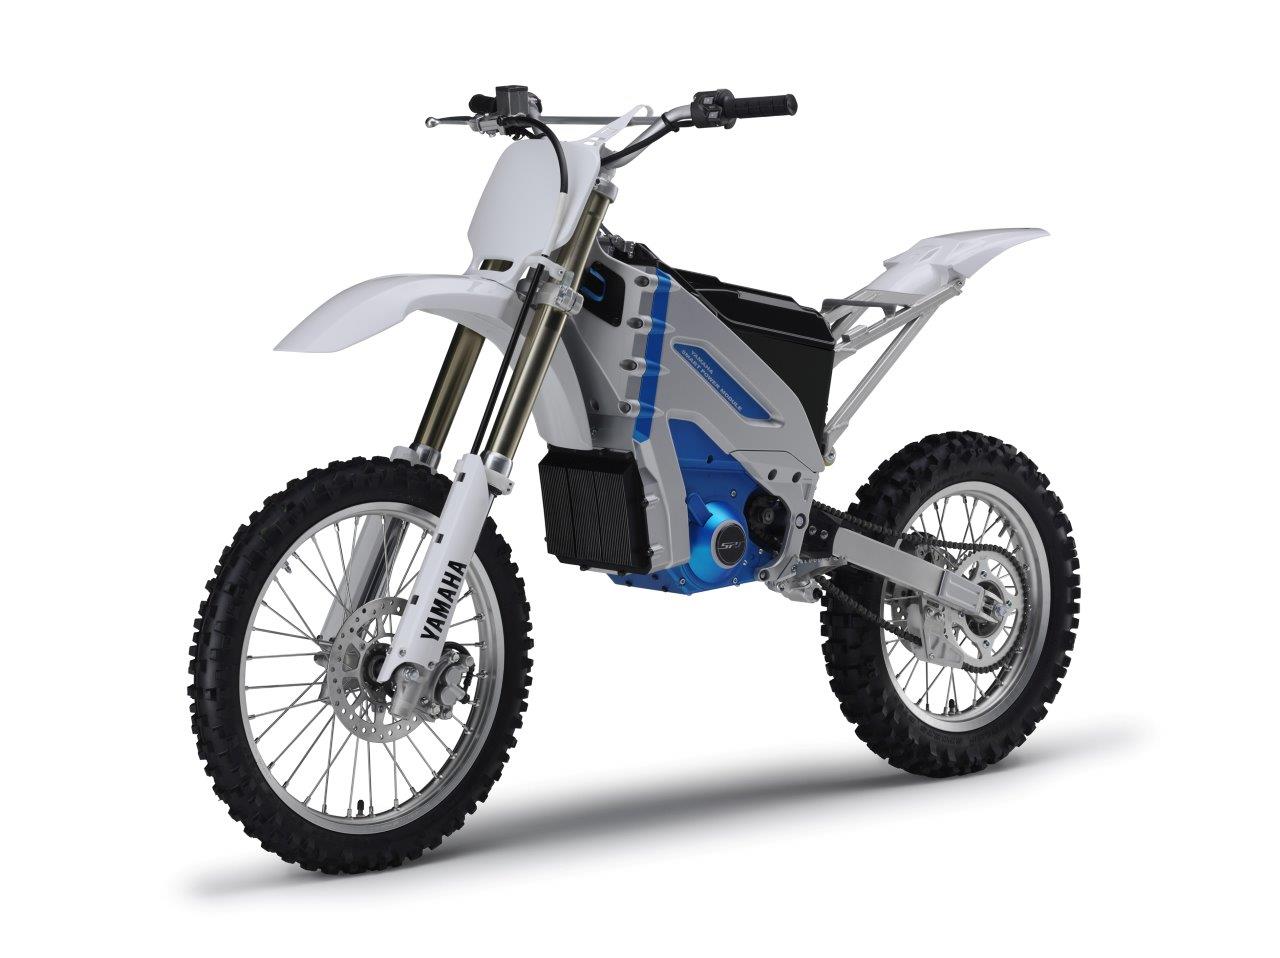 Yamaha to produce PES1 electric sports bike and PED1 dirt bike